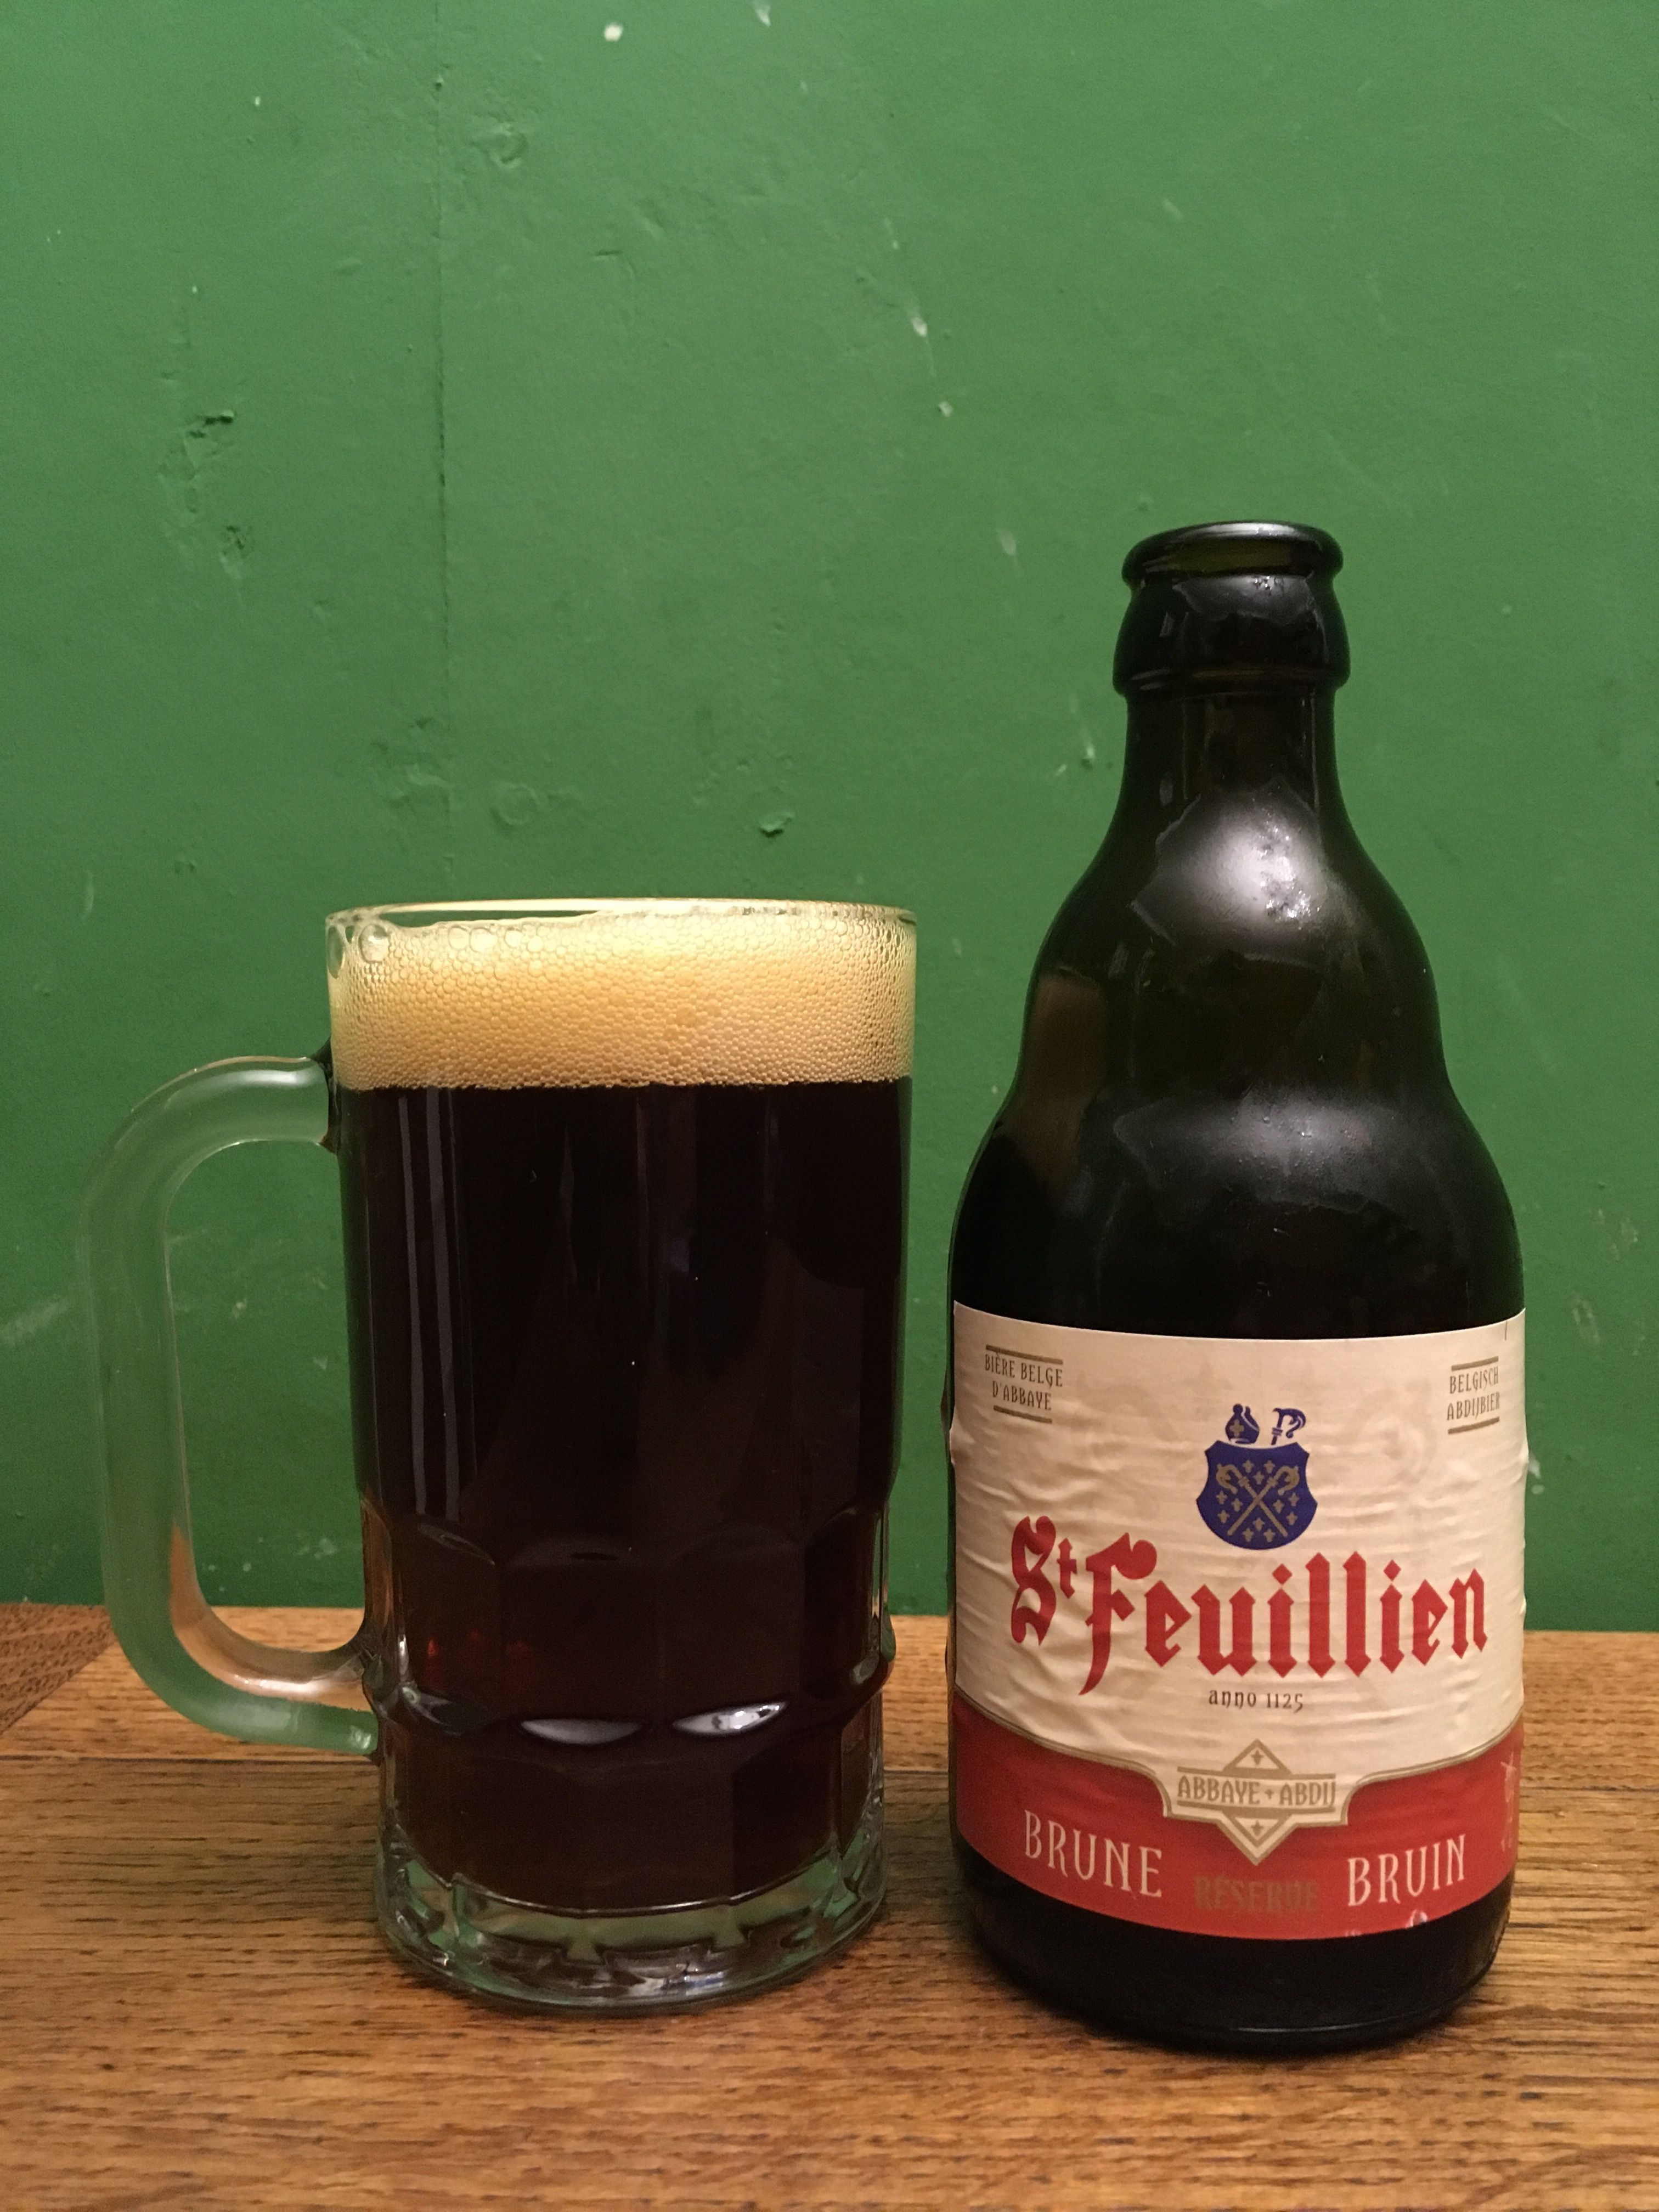 Bia St-Feuillien Blond 7,5% 330 ml